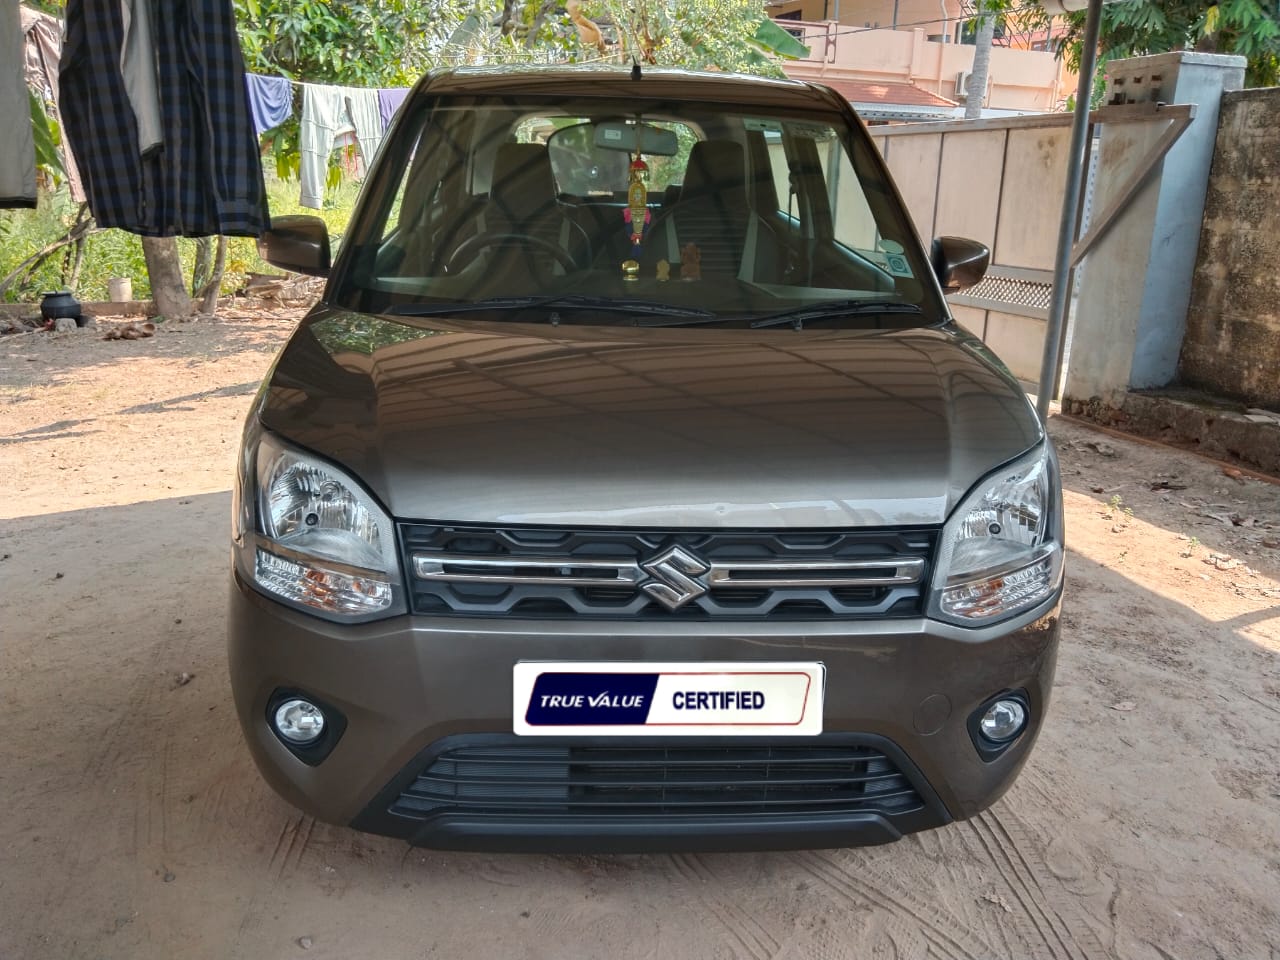 MARUTI WAGON R 2019 Second-hand Car for Sale in Ernakulam